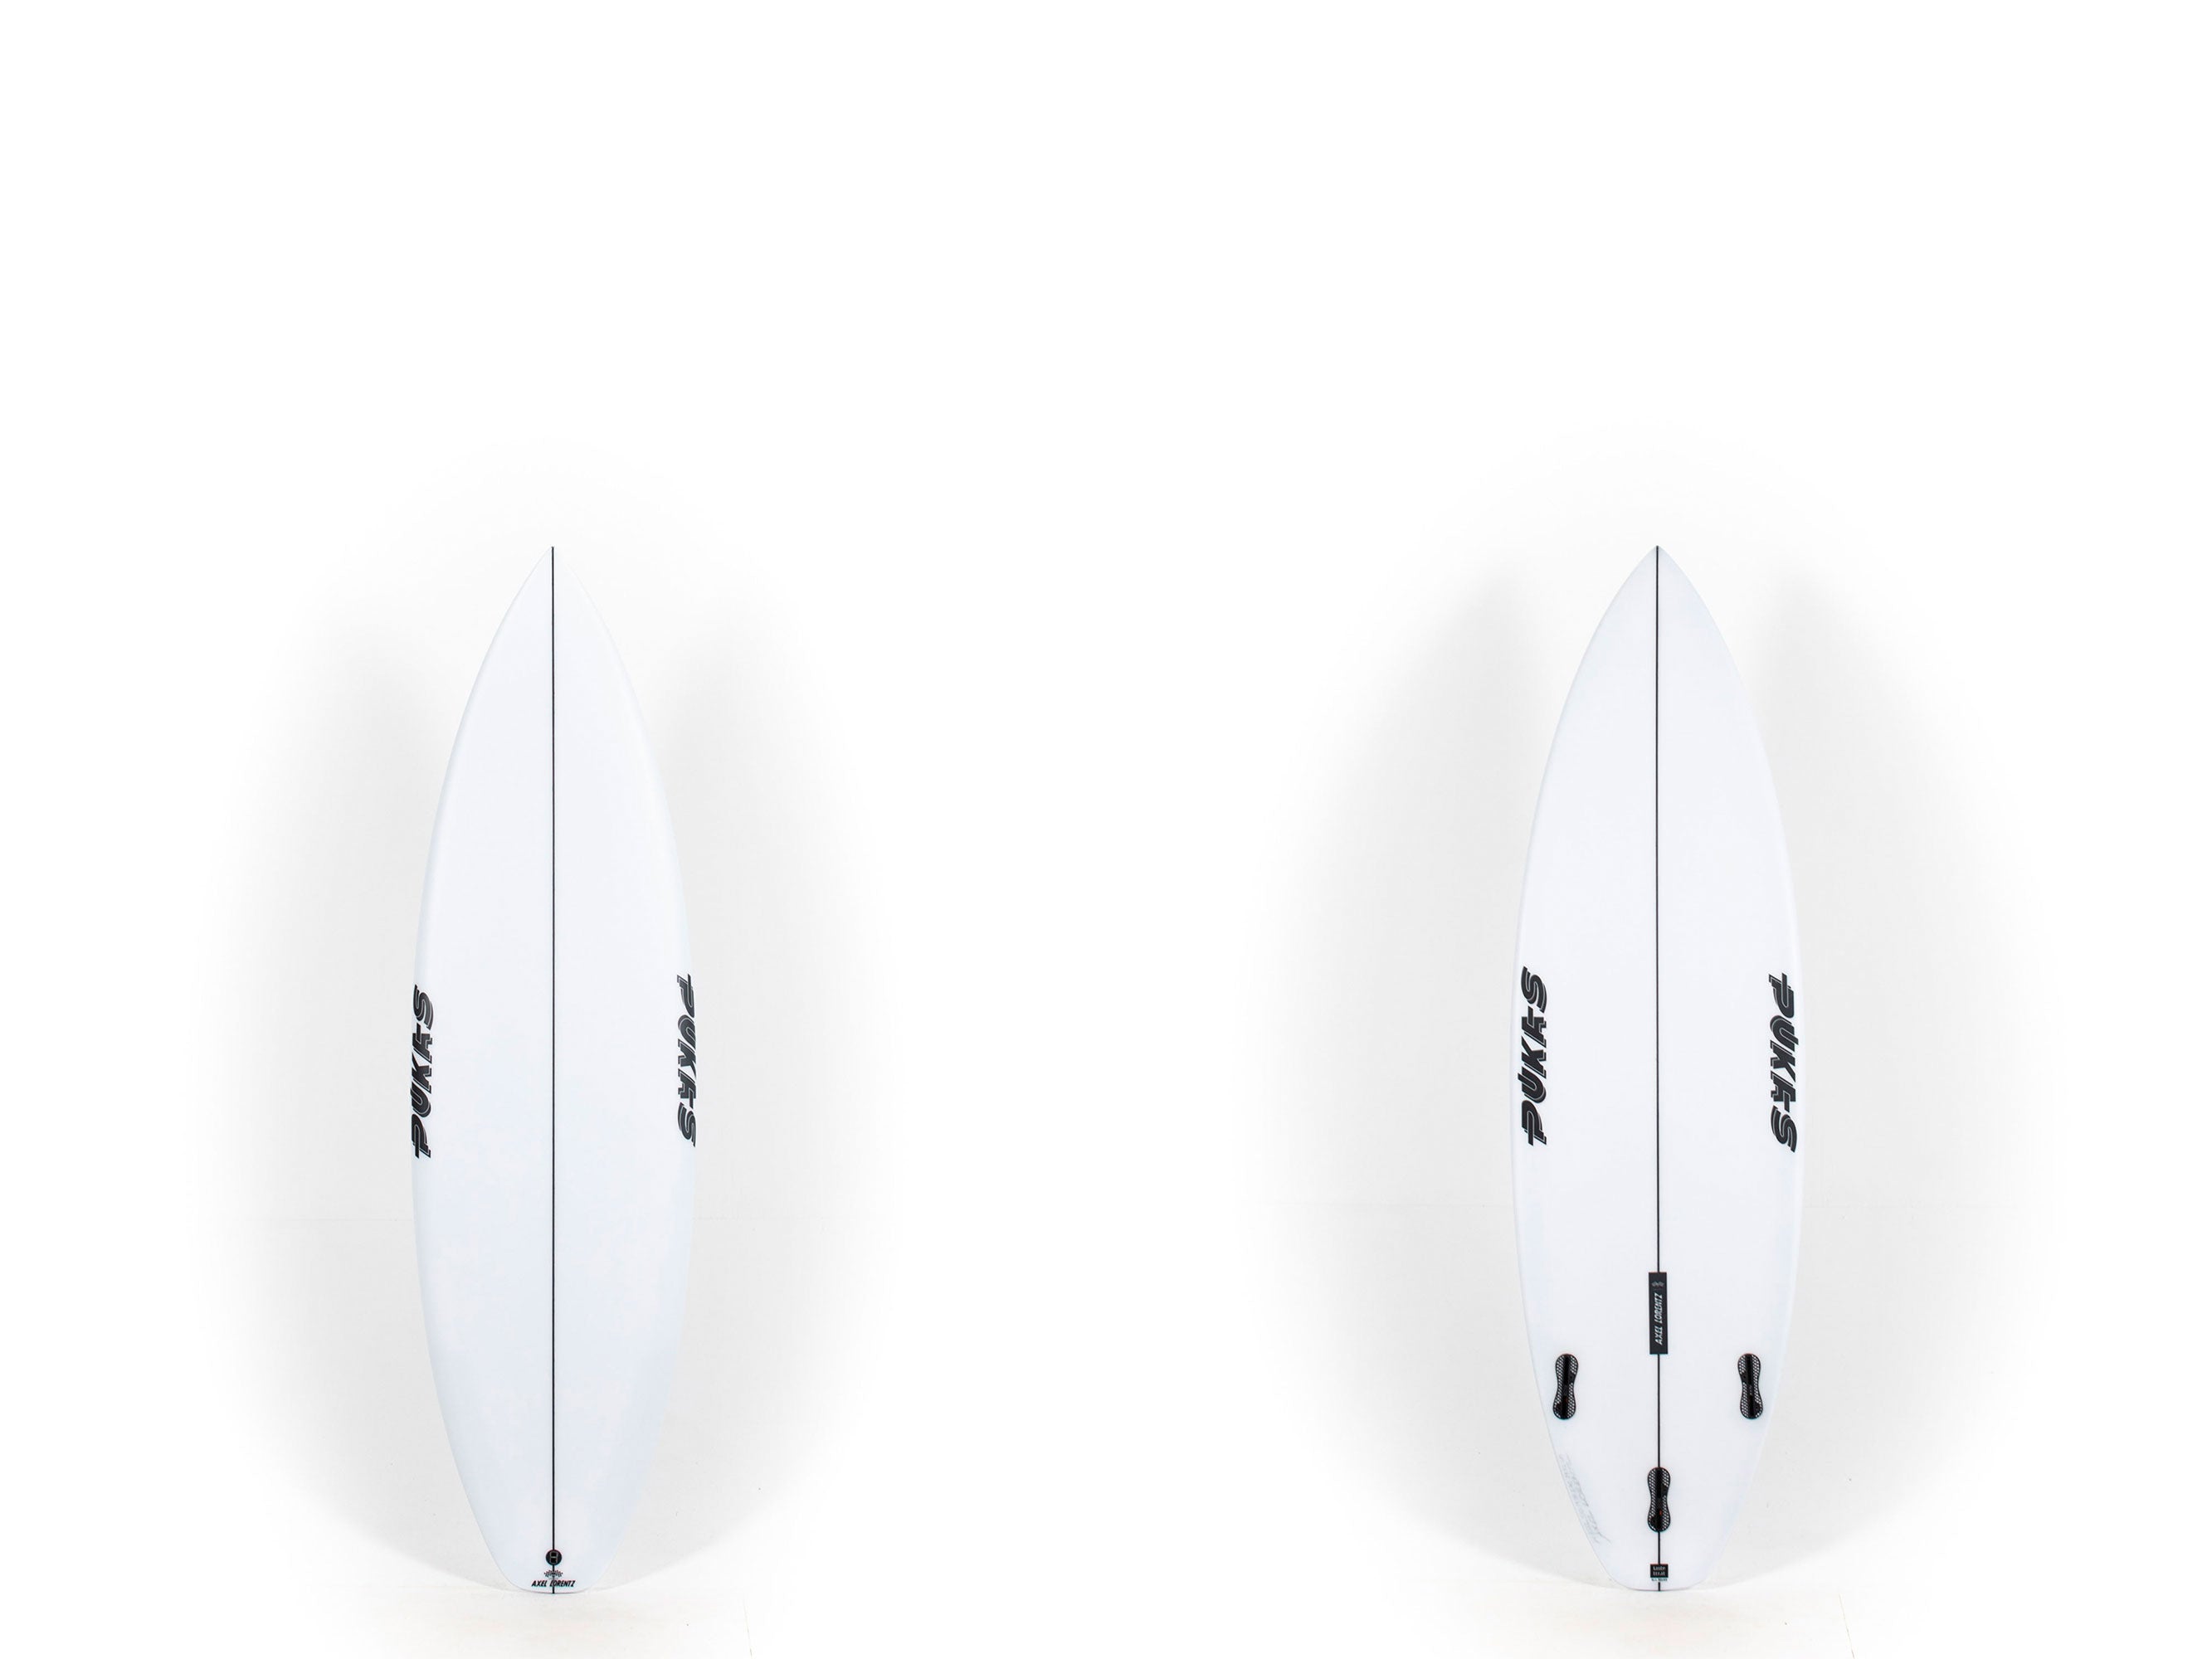 Pukas Surfboard - TASTY TREAT ALL ROUND by Axel Lorentz - 5'10" x 19.38 x 2.45 x 29.30L - AX08532